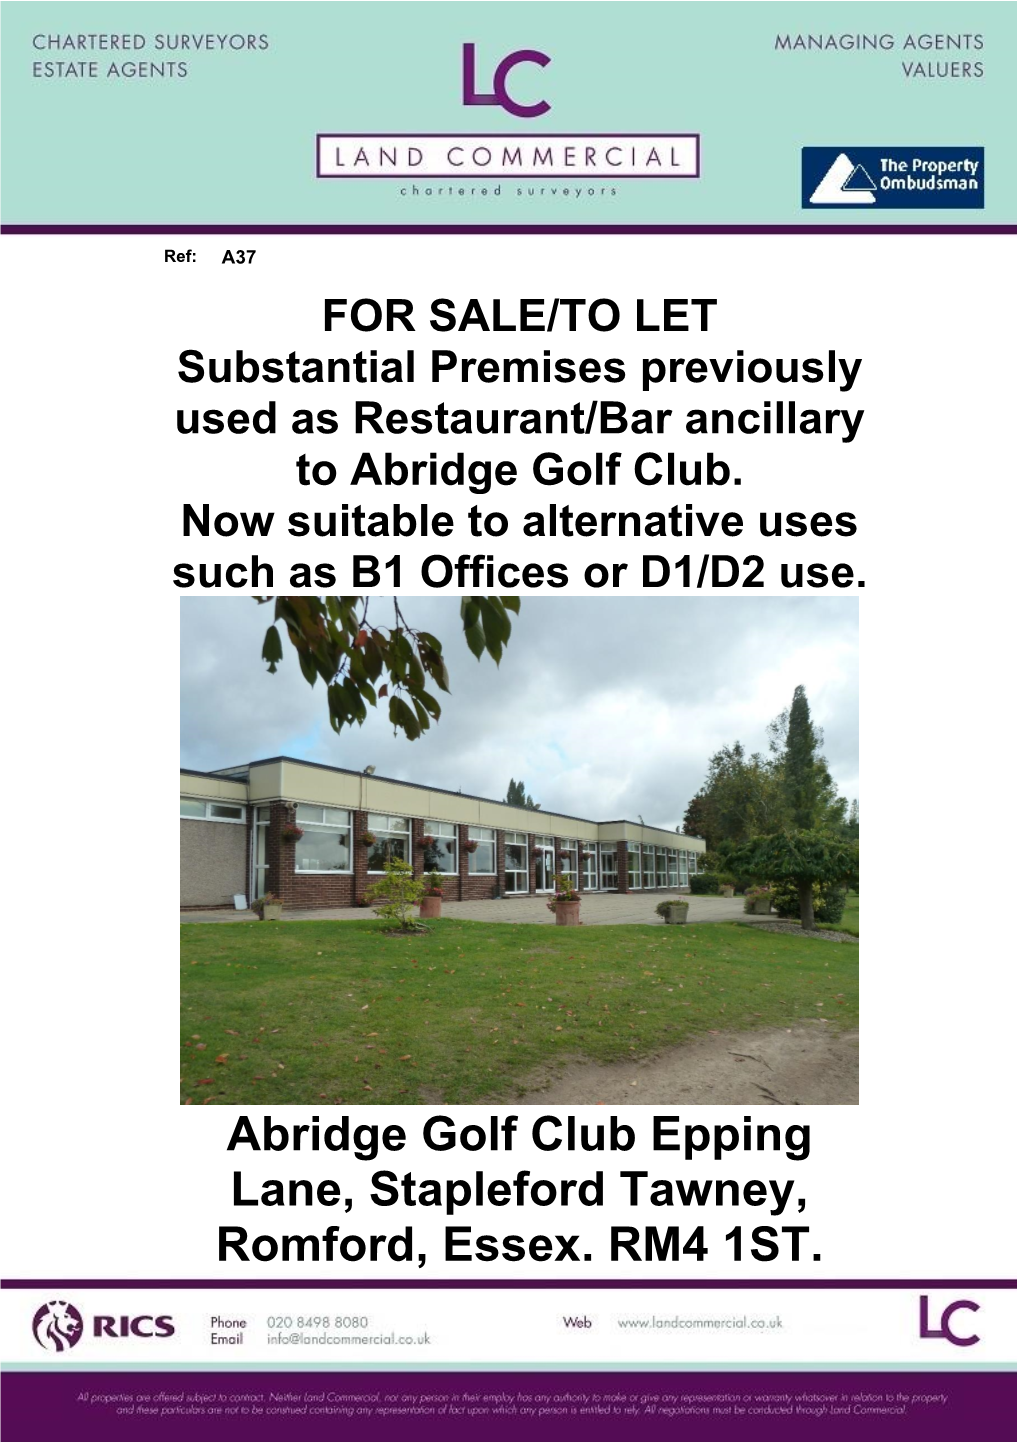 Abridge Golf Club Epping Lane, Stapleford Tawney, Romford, Essex